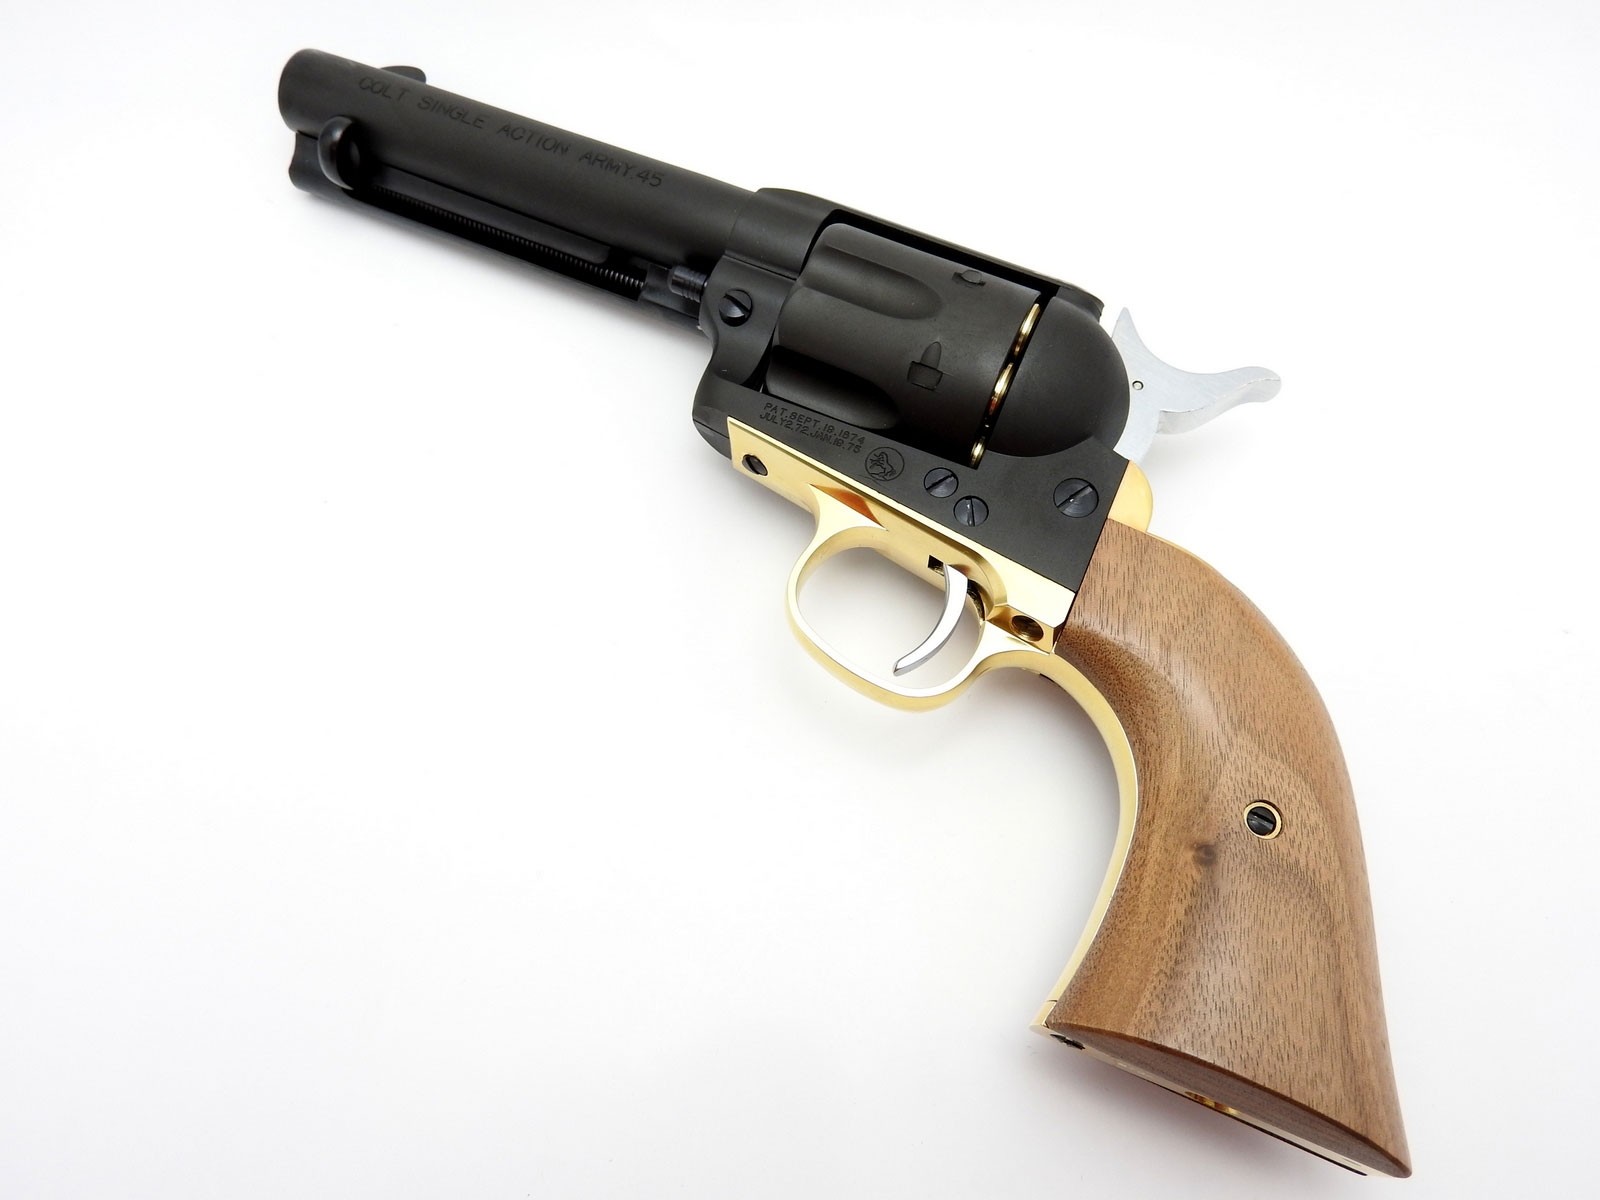 Marushin Colt SAA .45 Peacemaker 6mm DX HW Revolver